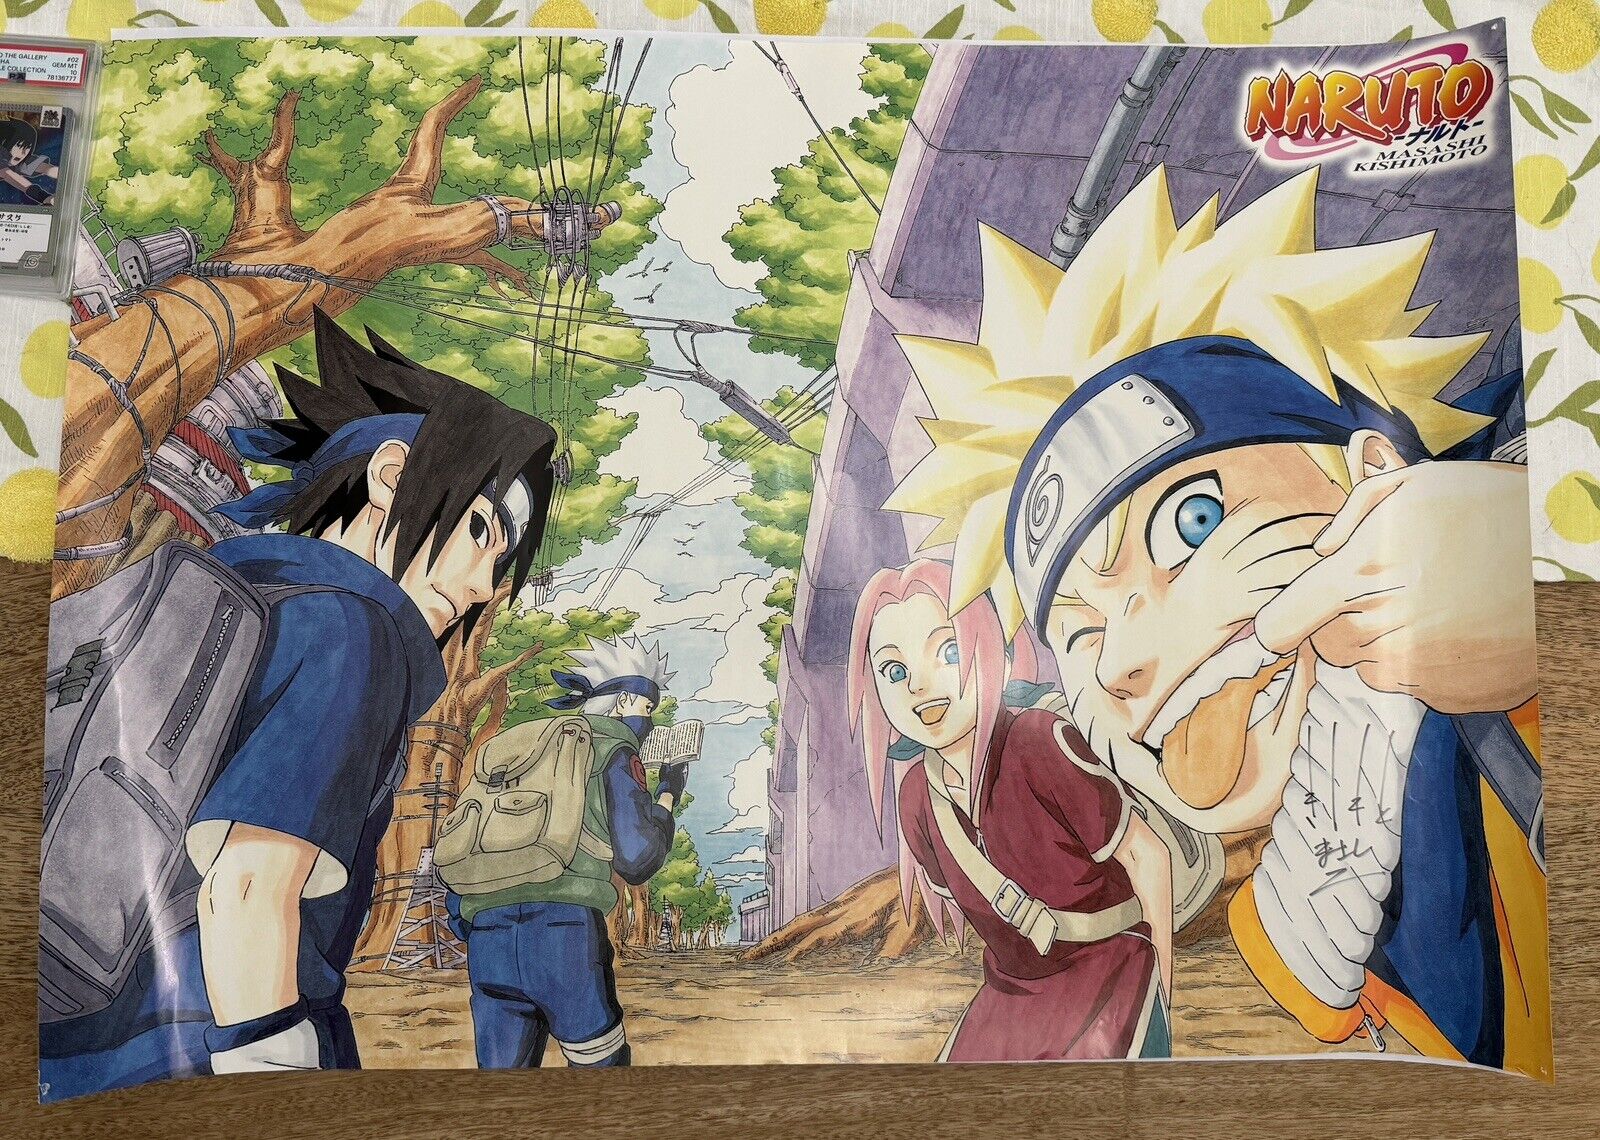 RARE Naruto Original Artwork Poster Signed By Masashi Kishimoto